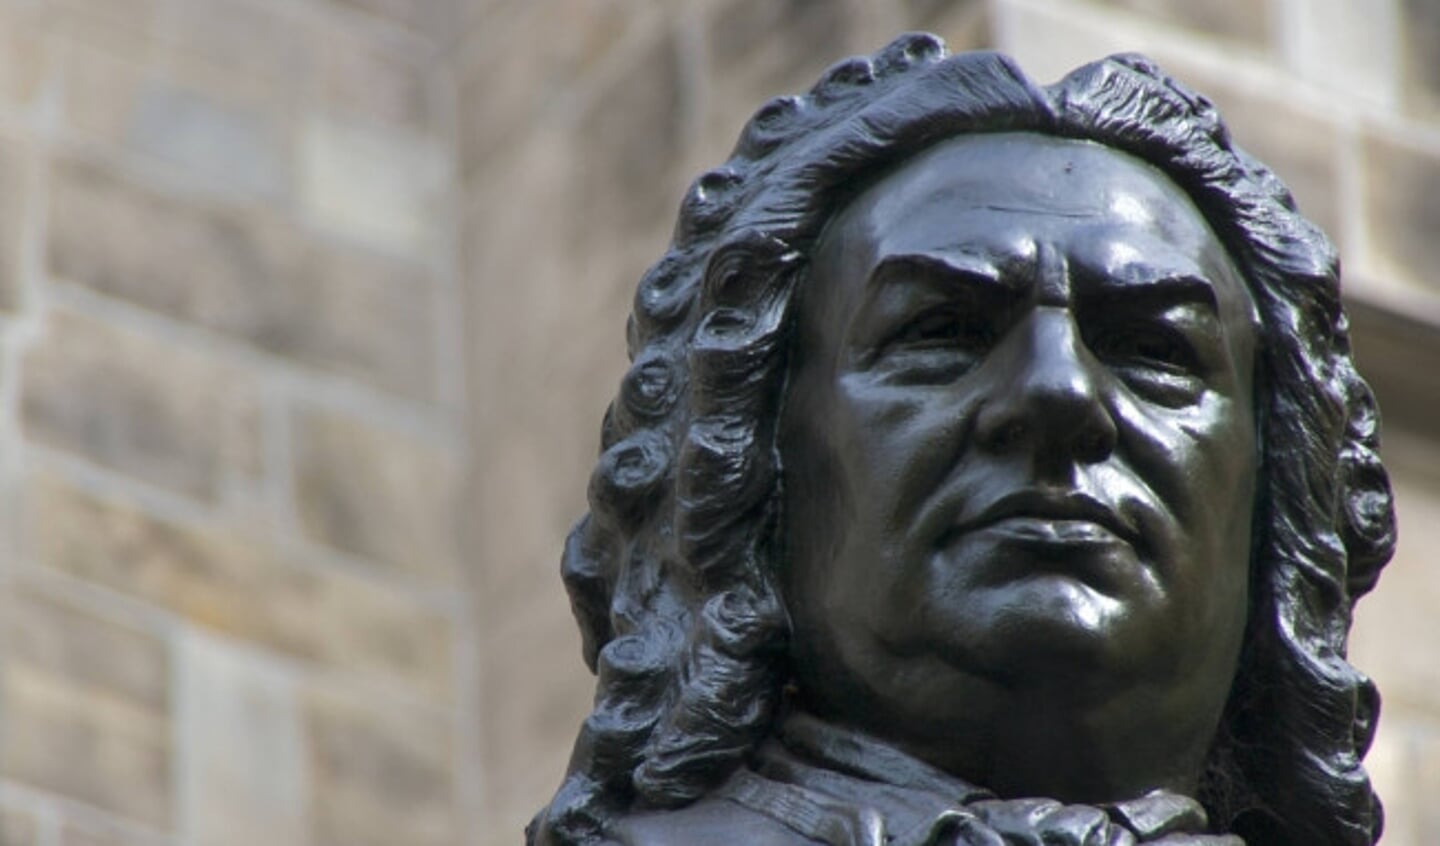 Deel van het standbeeld van Johann Sebastian Bach voor de Thomaskirche in Leipzig waar Bach cantor-organist was.  